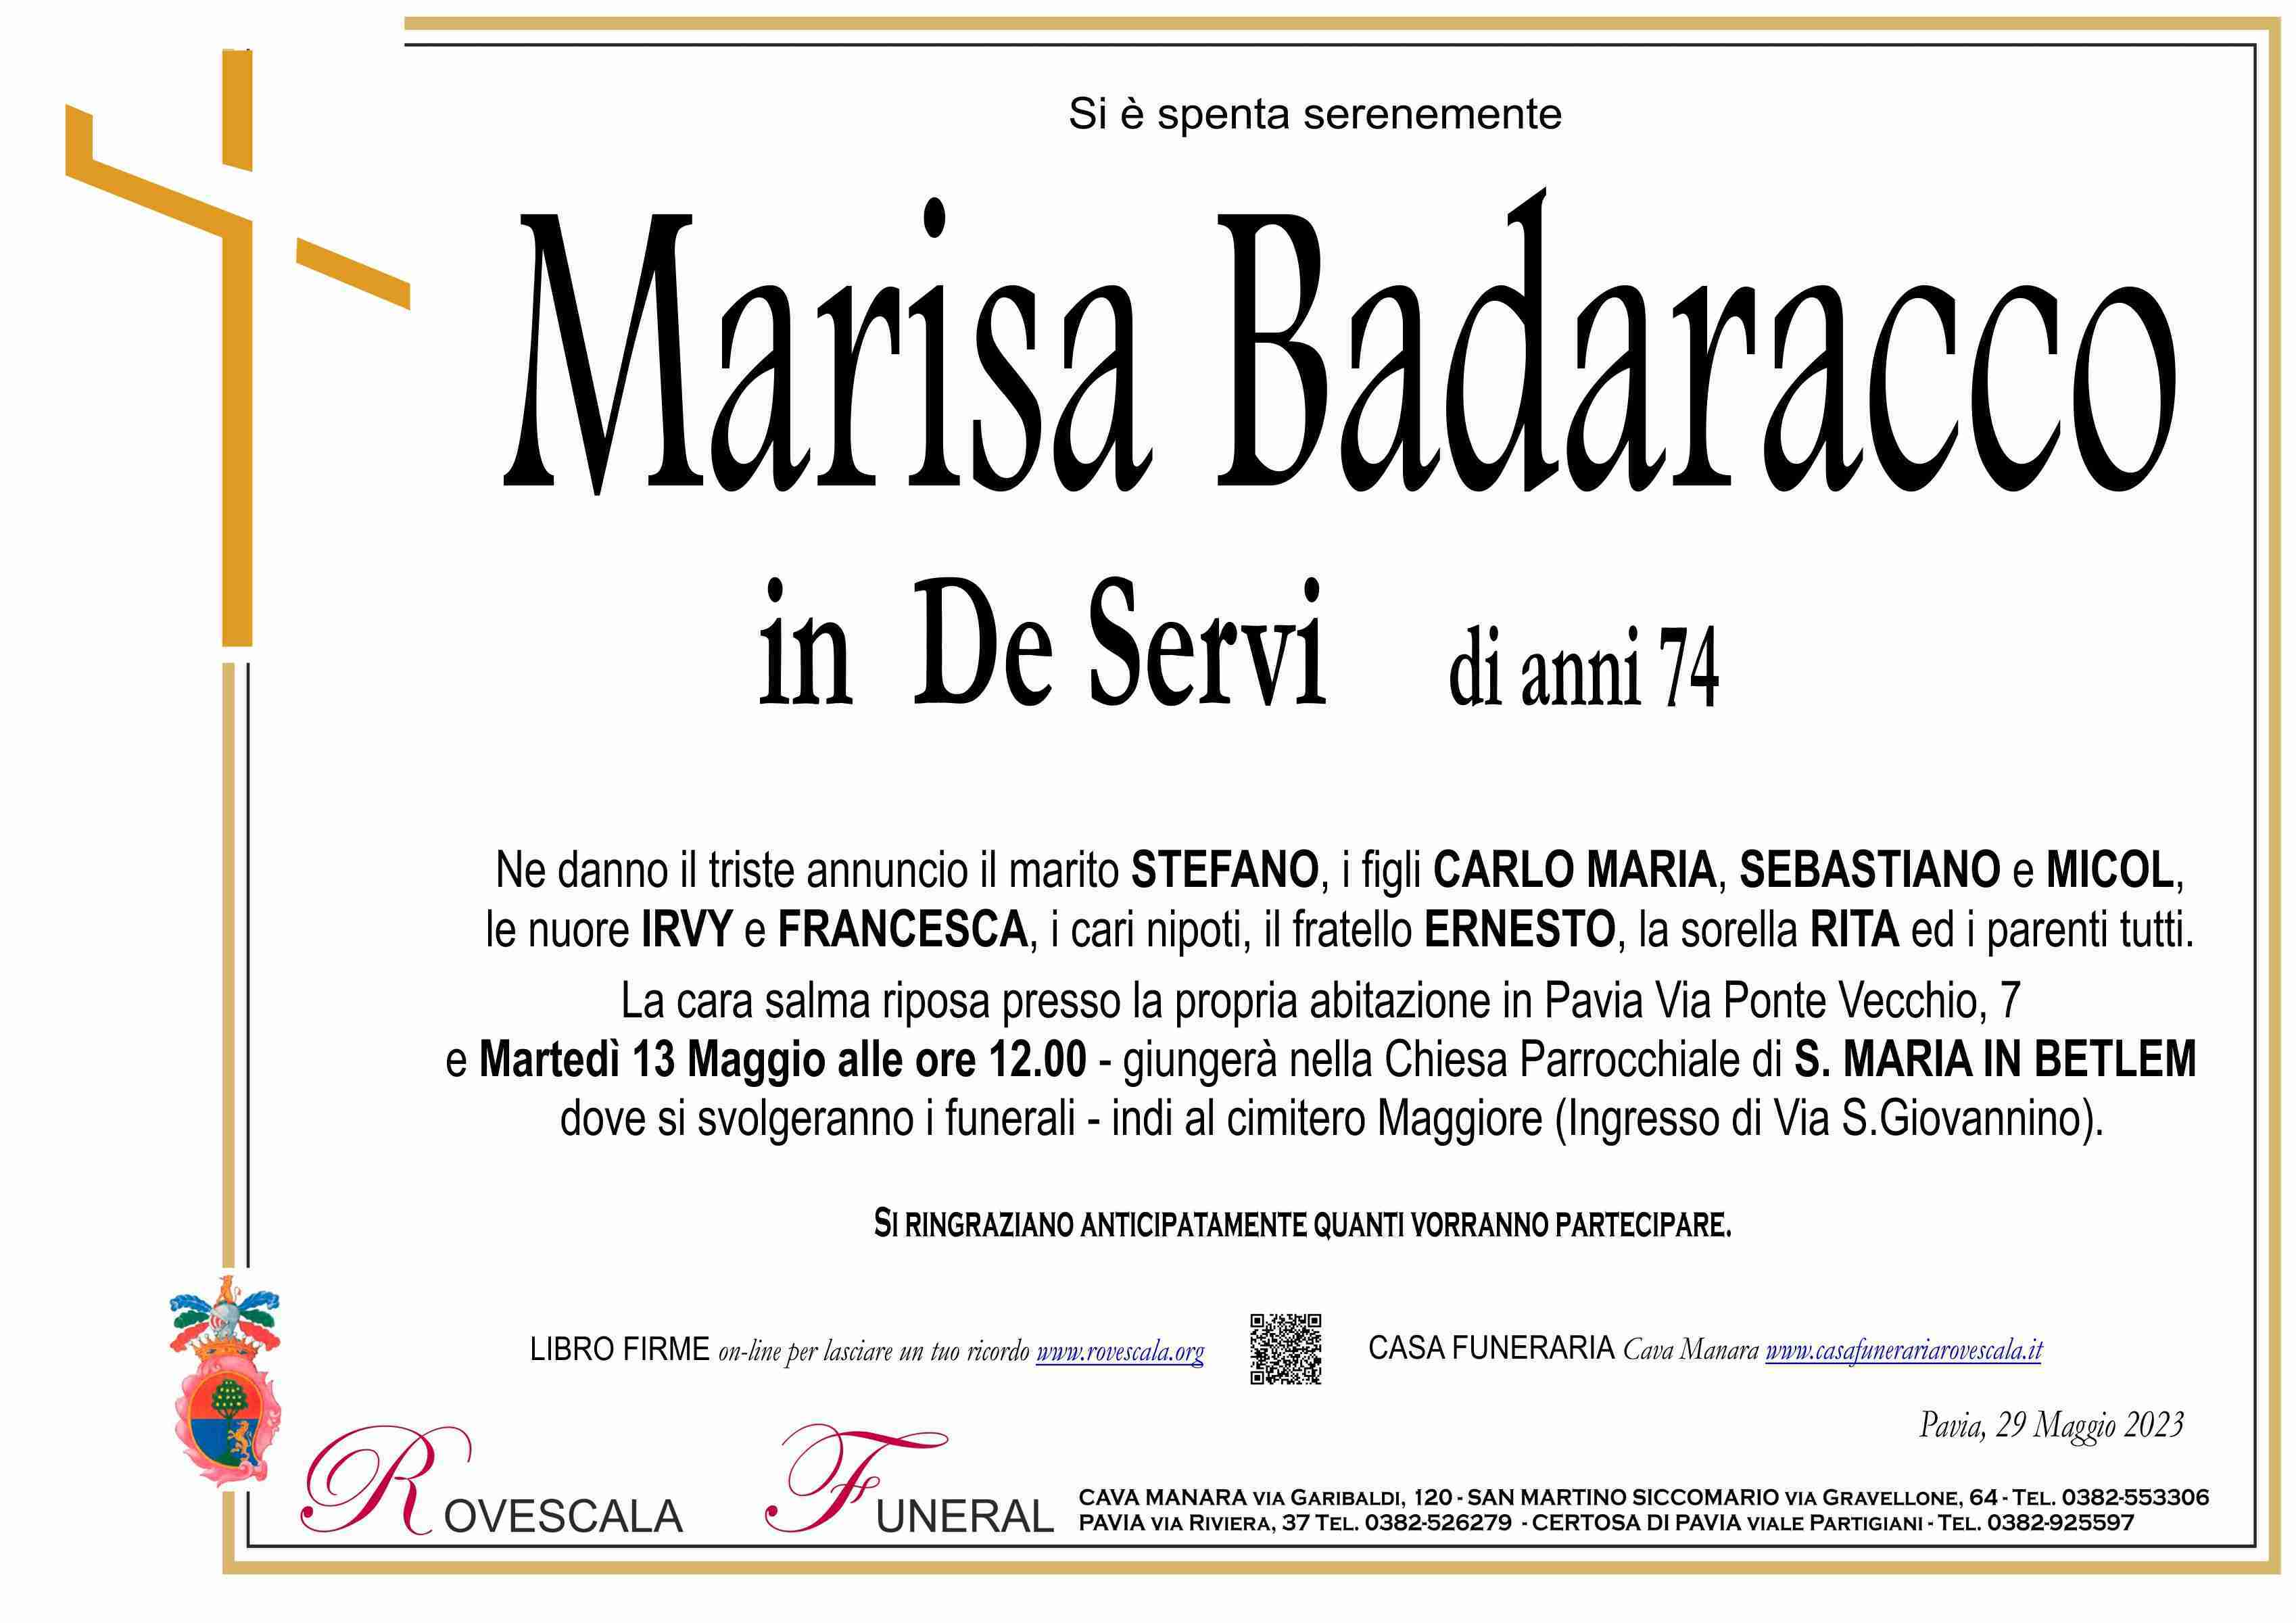 Marisa Badaracco